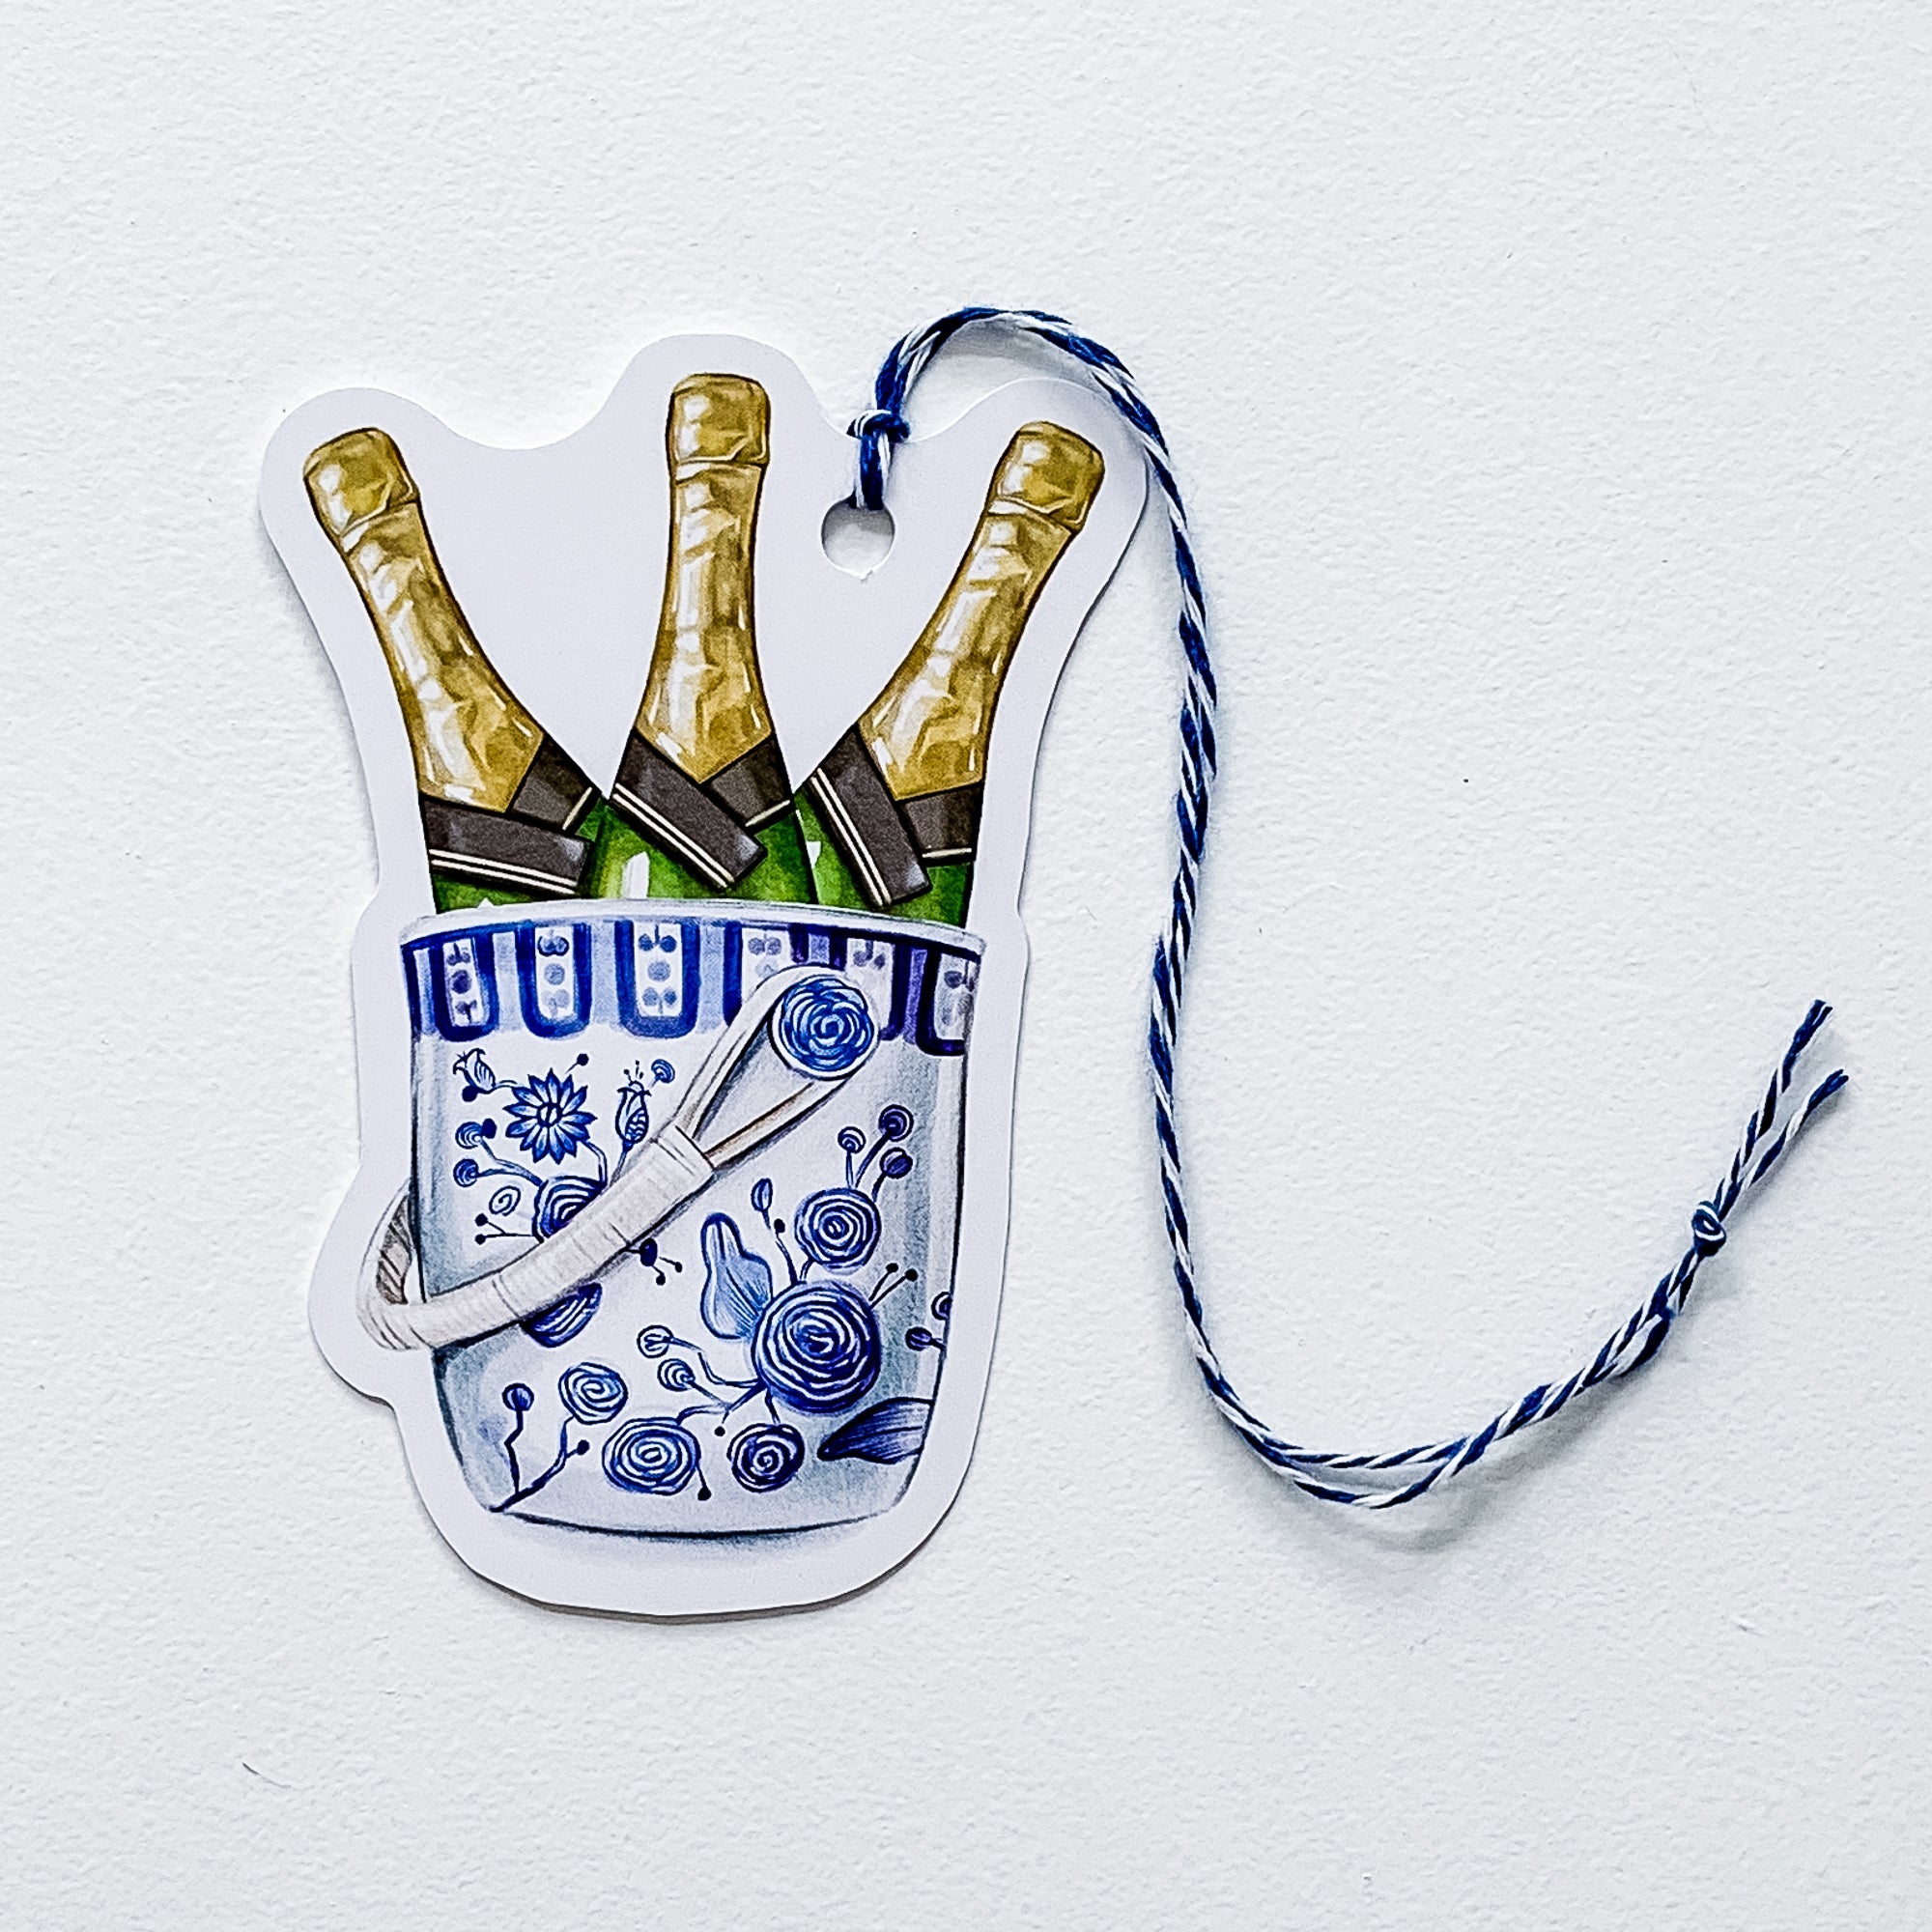 Champagne Bucket Shaped Gift Tag Set - Hydrangea Lane Home